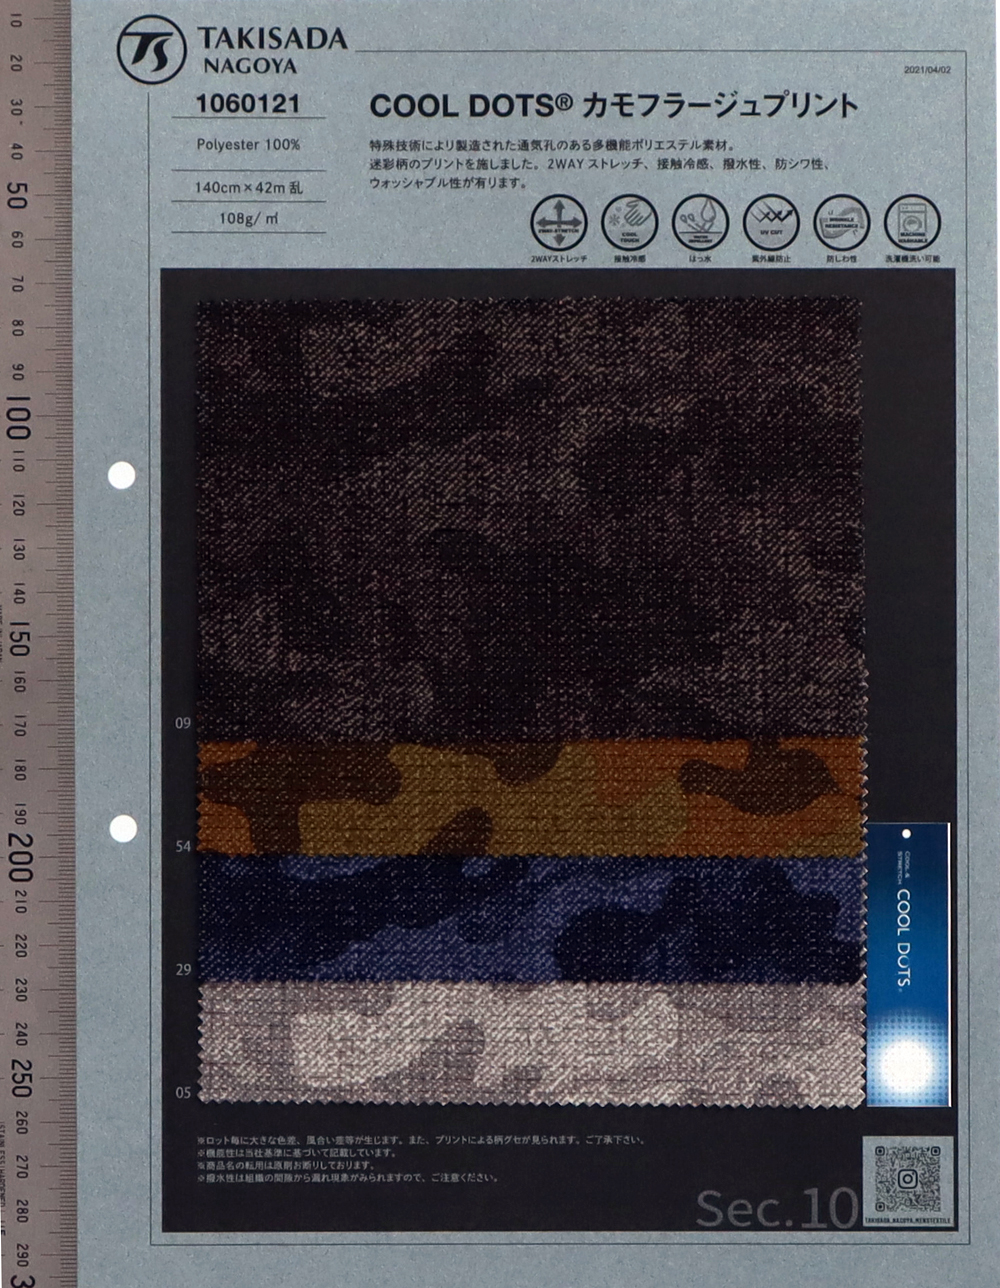 1060121 Imprimé Camouflage COOL DOTS®[Fabrication De Textile] Takisada Nagoya